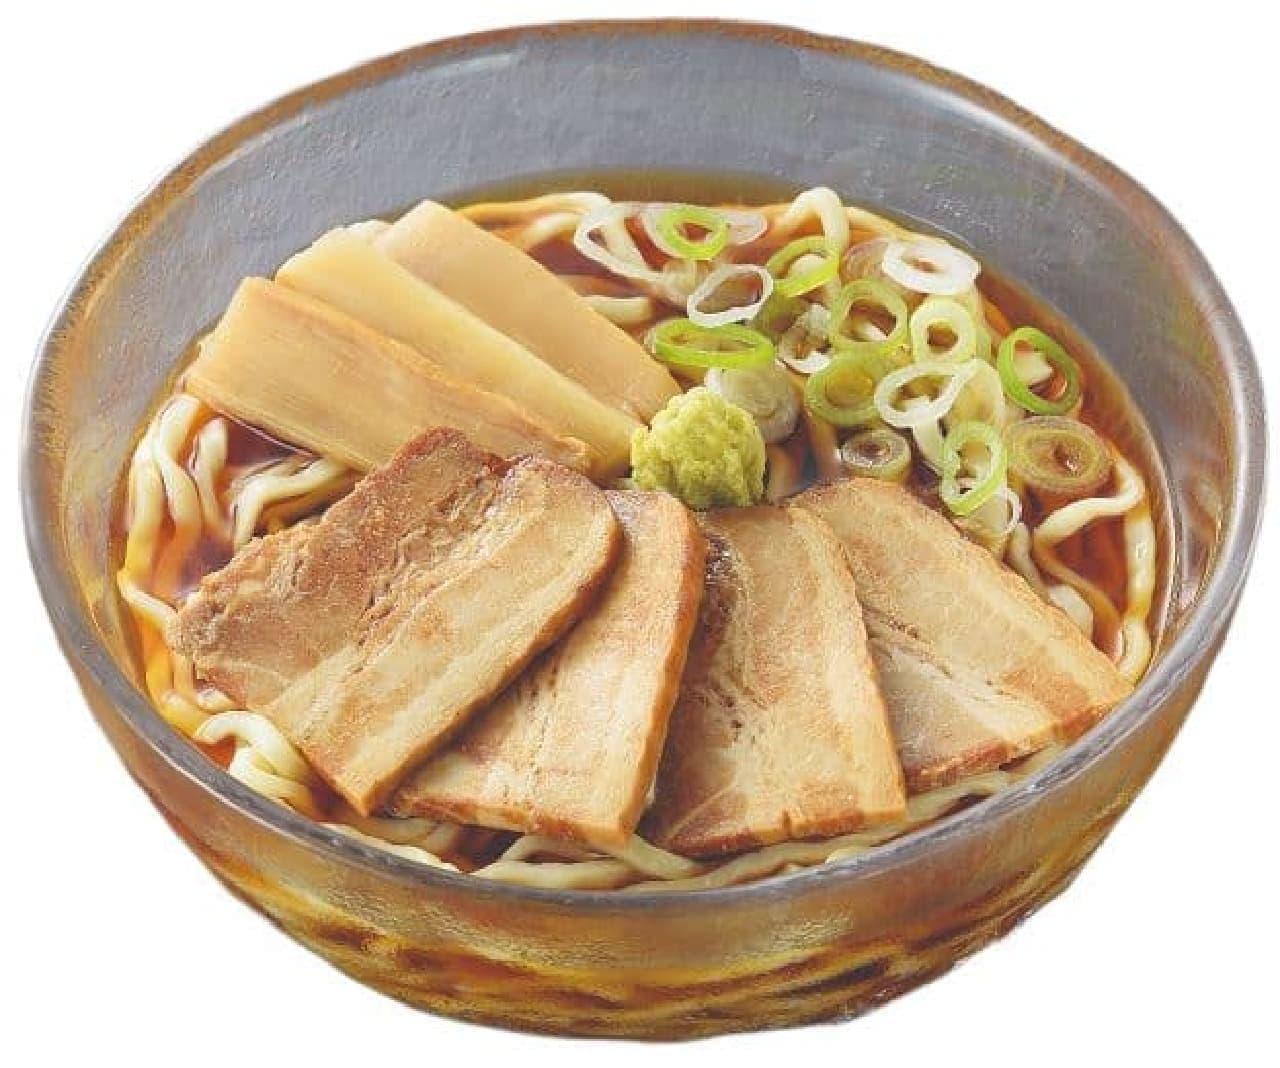 LAWSON "Japanese-style cold ramen noodles supervised by Bannai Shokudo